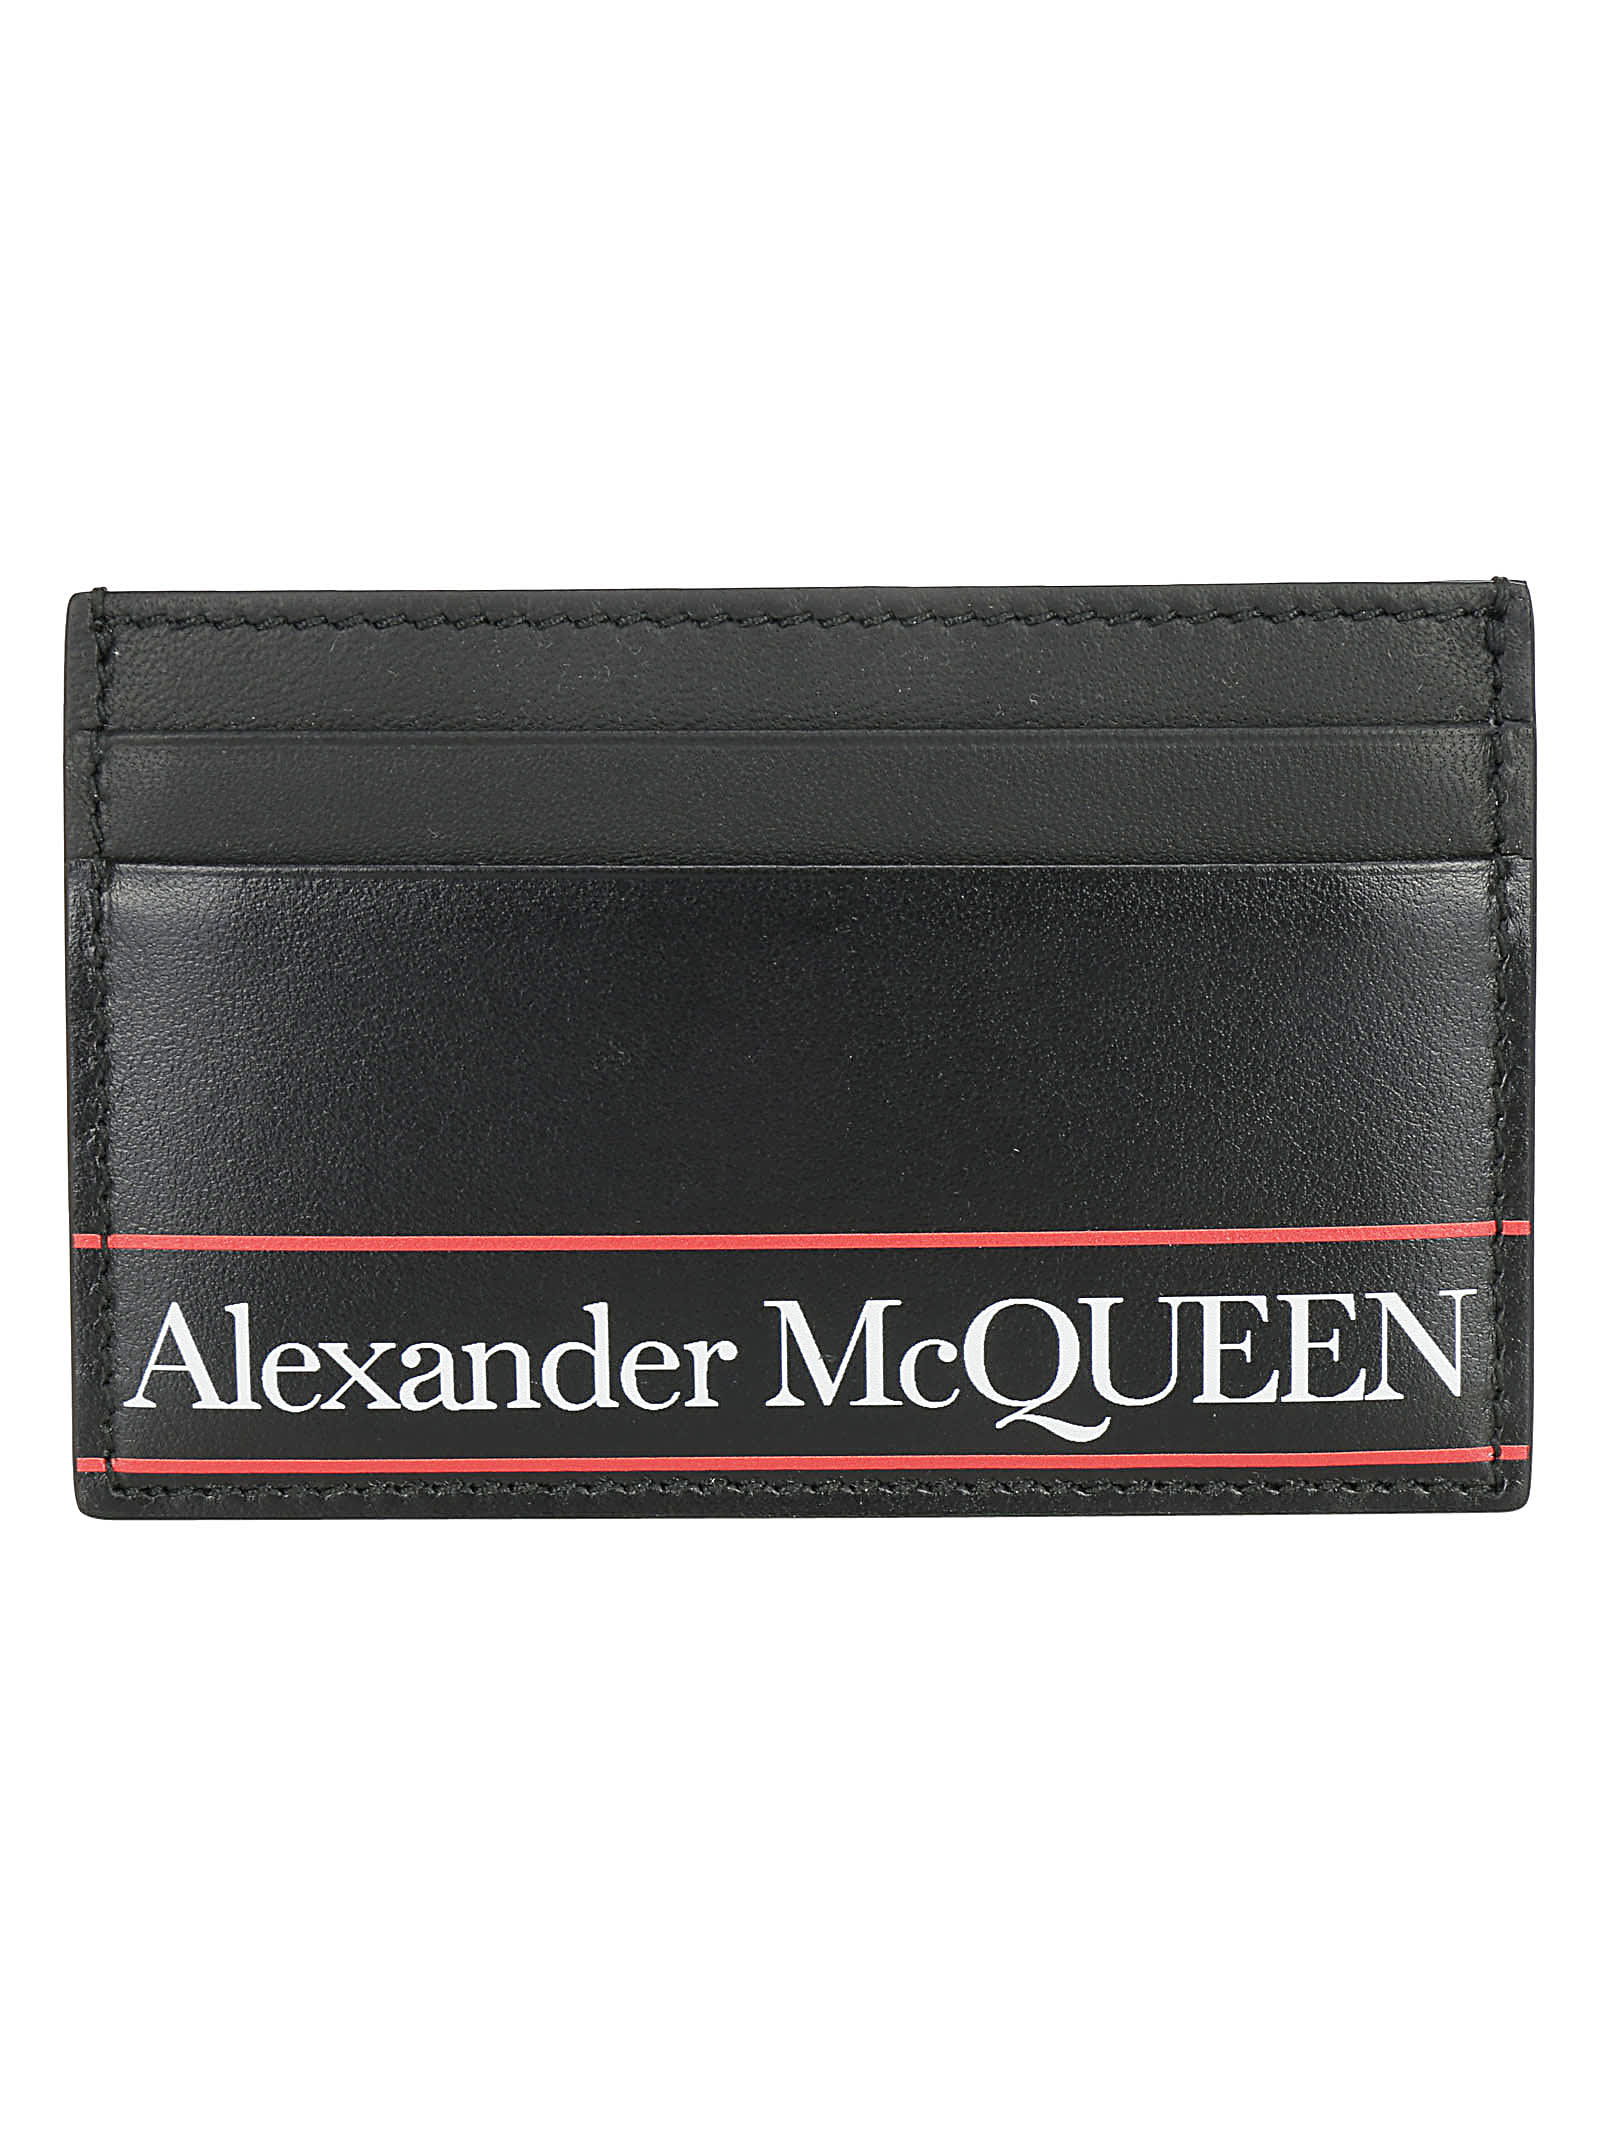 alexander mcqueen card holder sale